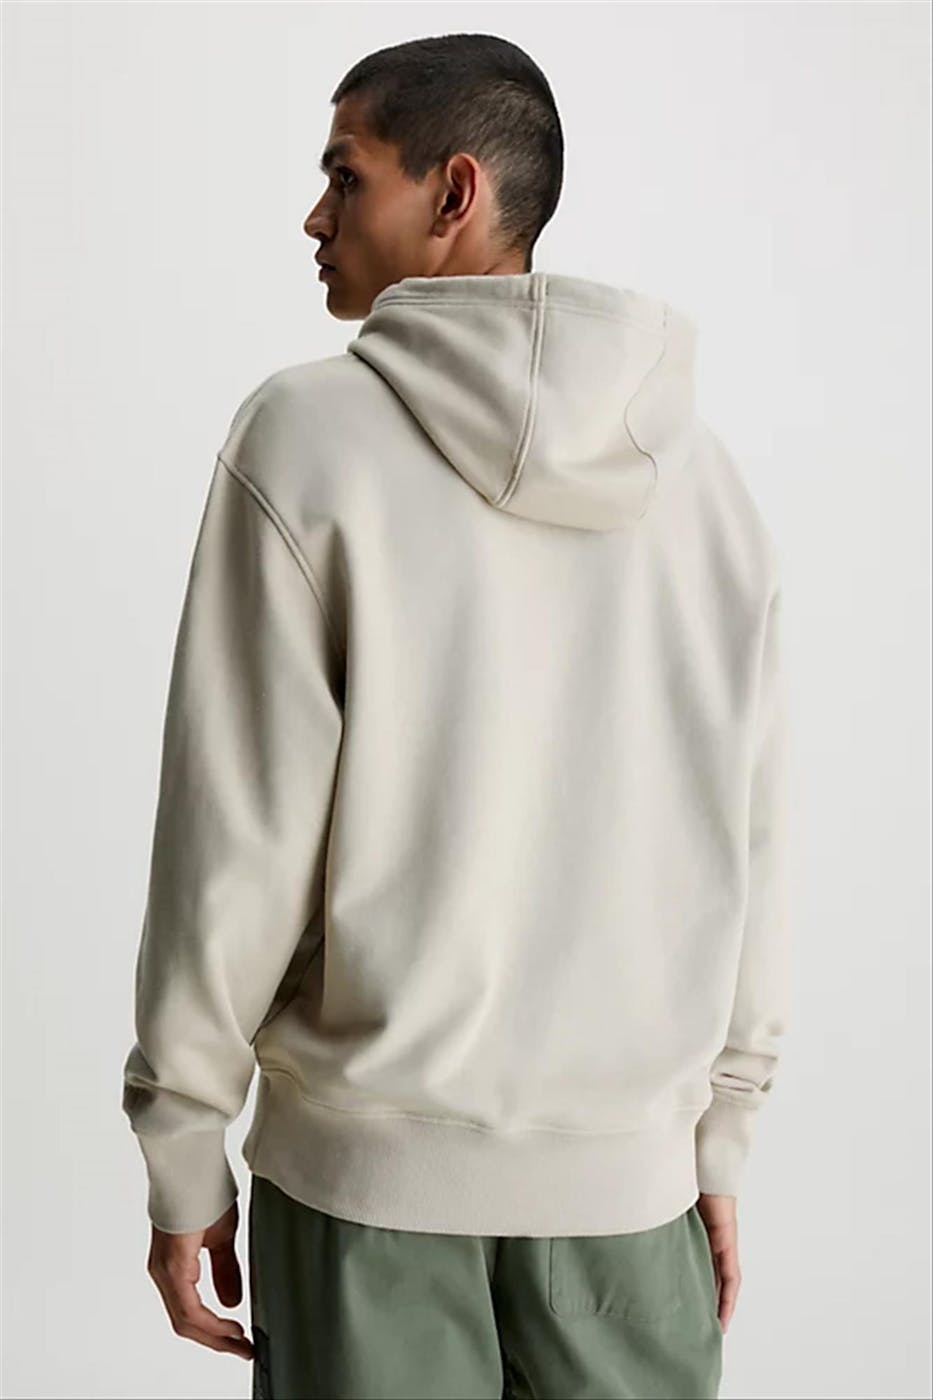 Calvin Klein Jeans - Beige CK Vlak hoodie